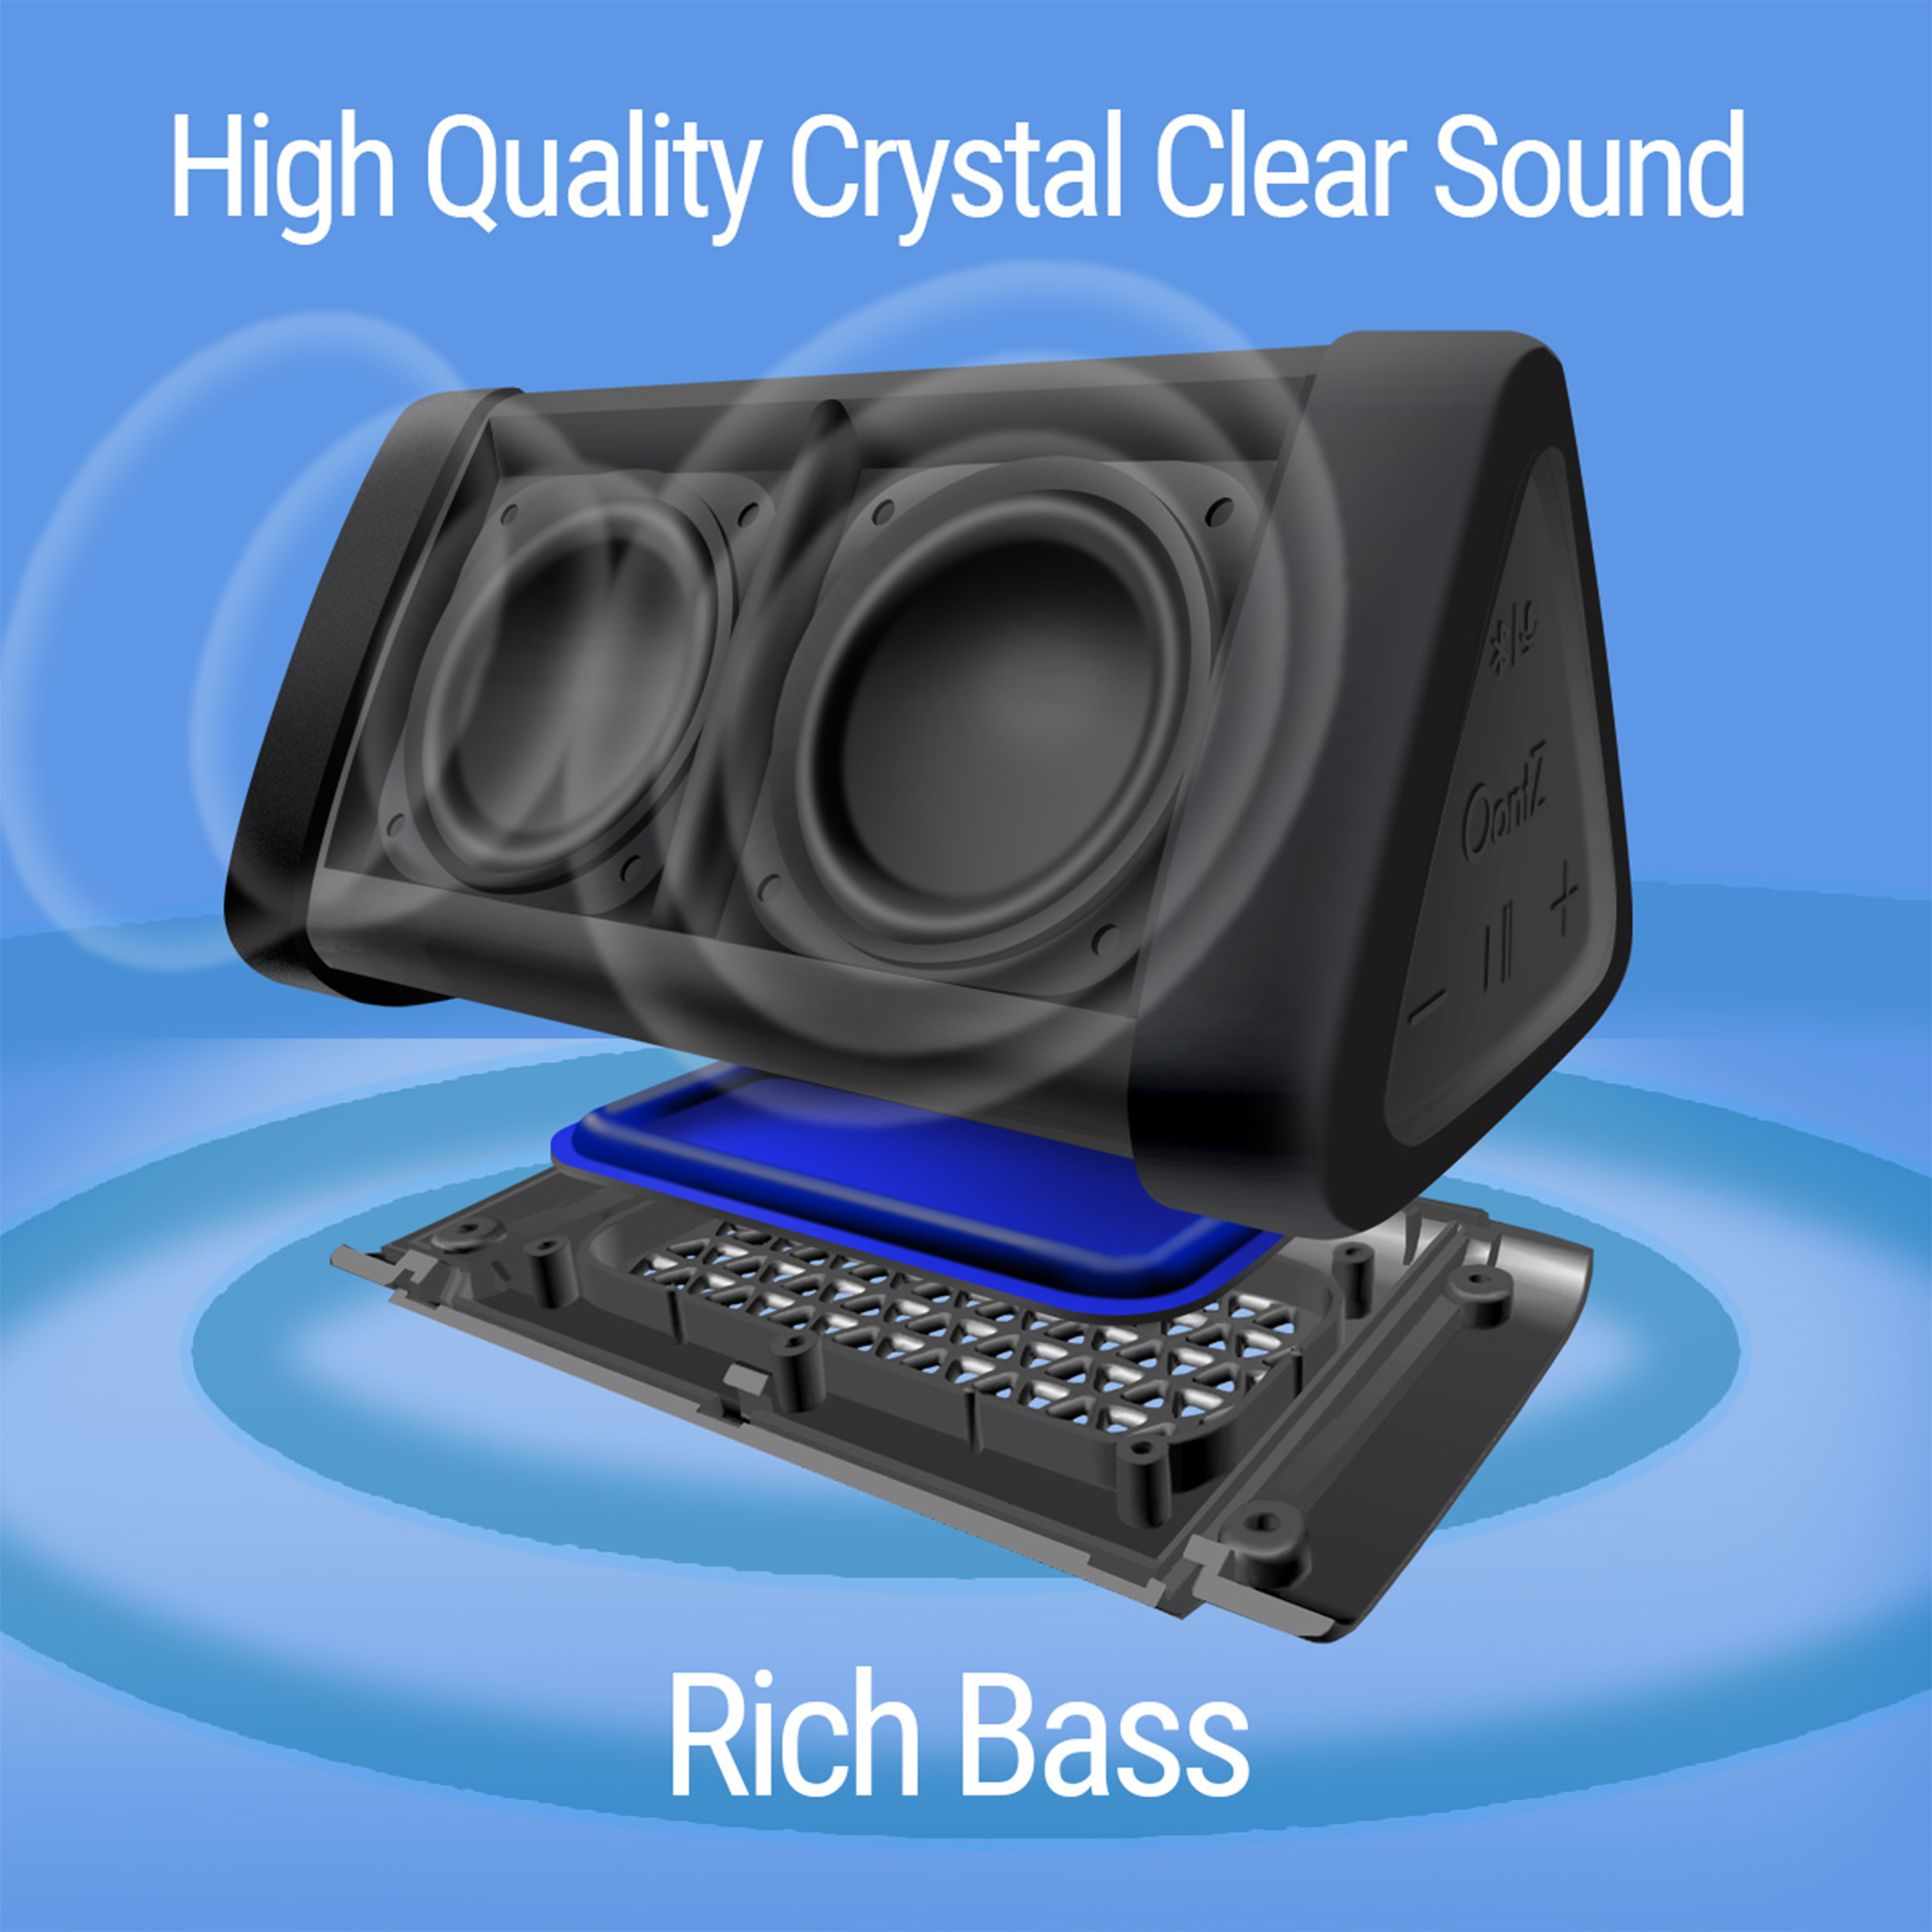 OontZ Angle 3 Enhanced Stereo Edition IPX5 Splashproof Portable Bluetooth Speaker, Volume Boost, Bass Radiator, 100' Range Bluetooth 4.2 [Blue] - image 2 of 6